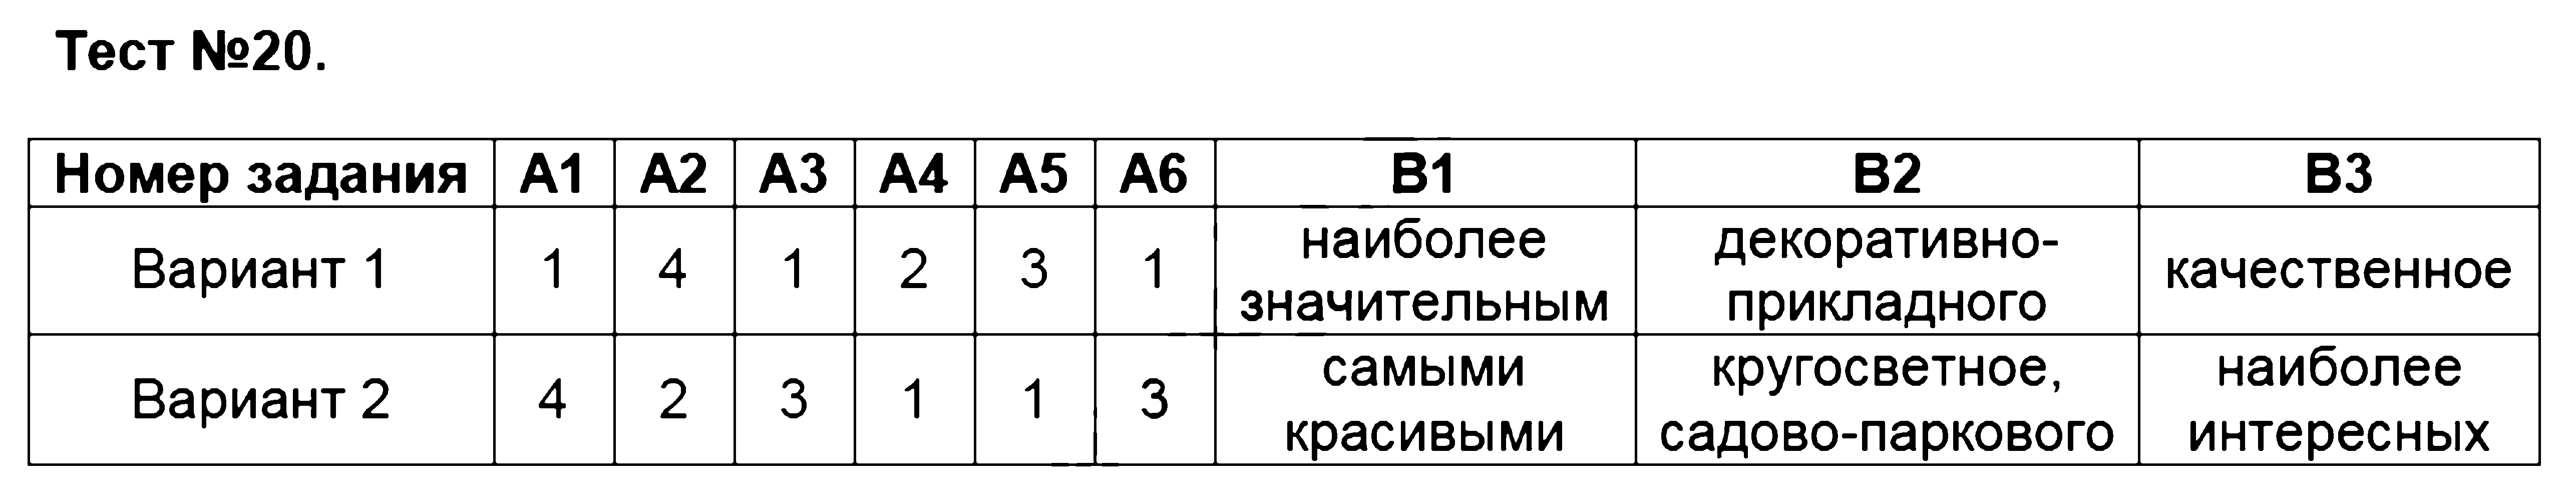 ГДЗ Русский язык 6 класс - Тест 20